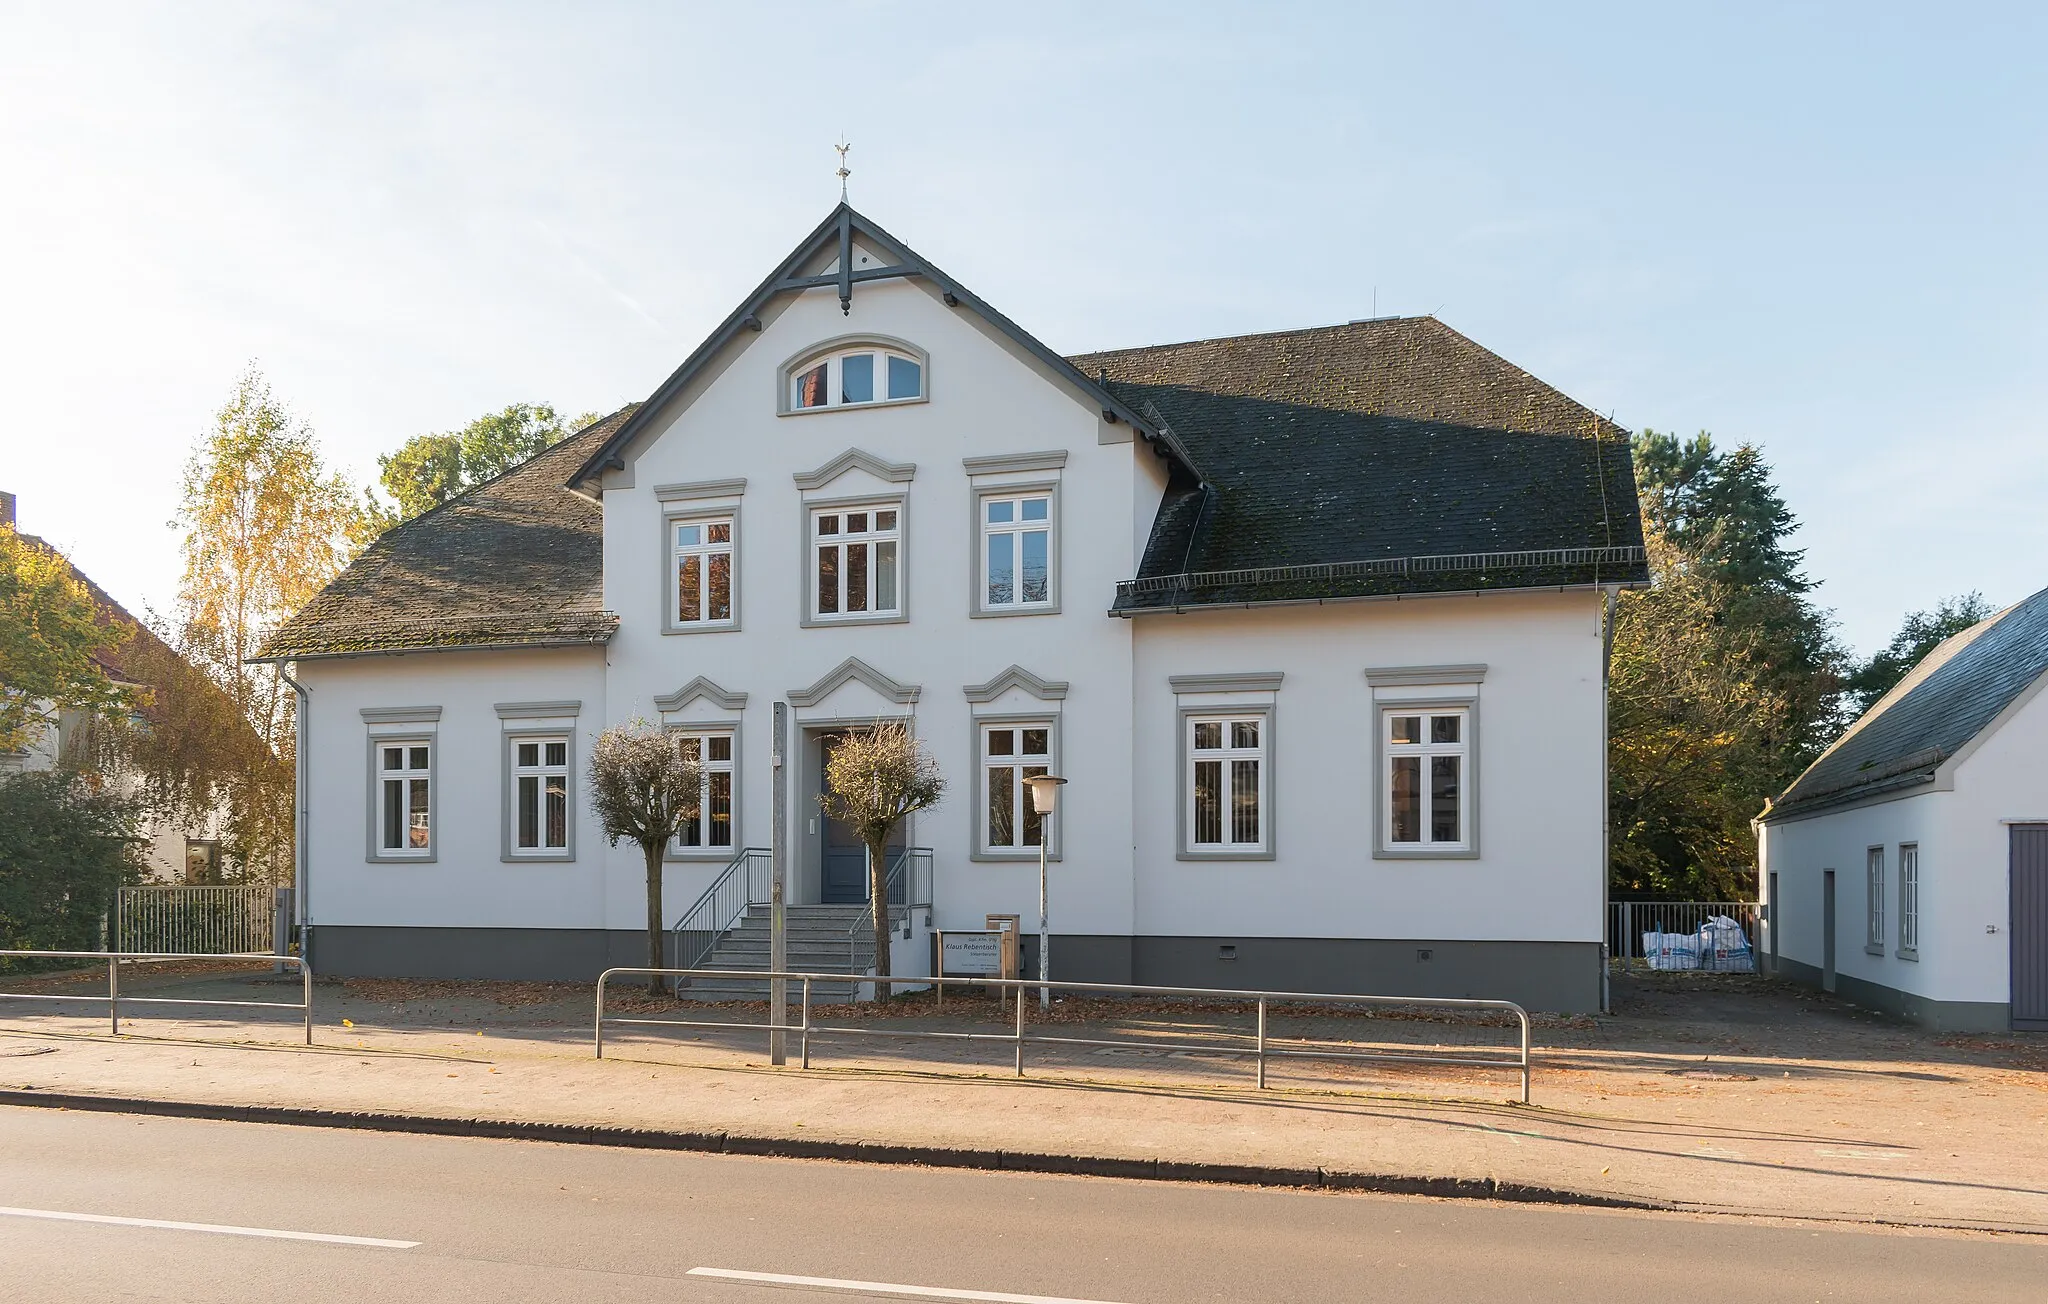 Photo showing: Building at Grüne Straße 13 in Ottersberg, Lower Saxony, Germany